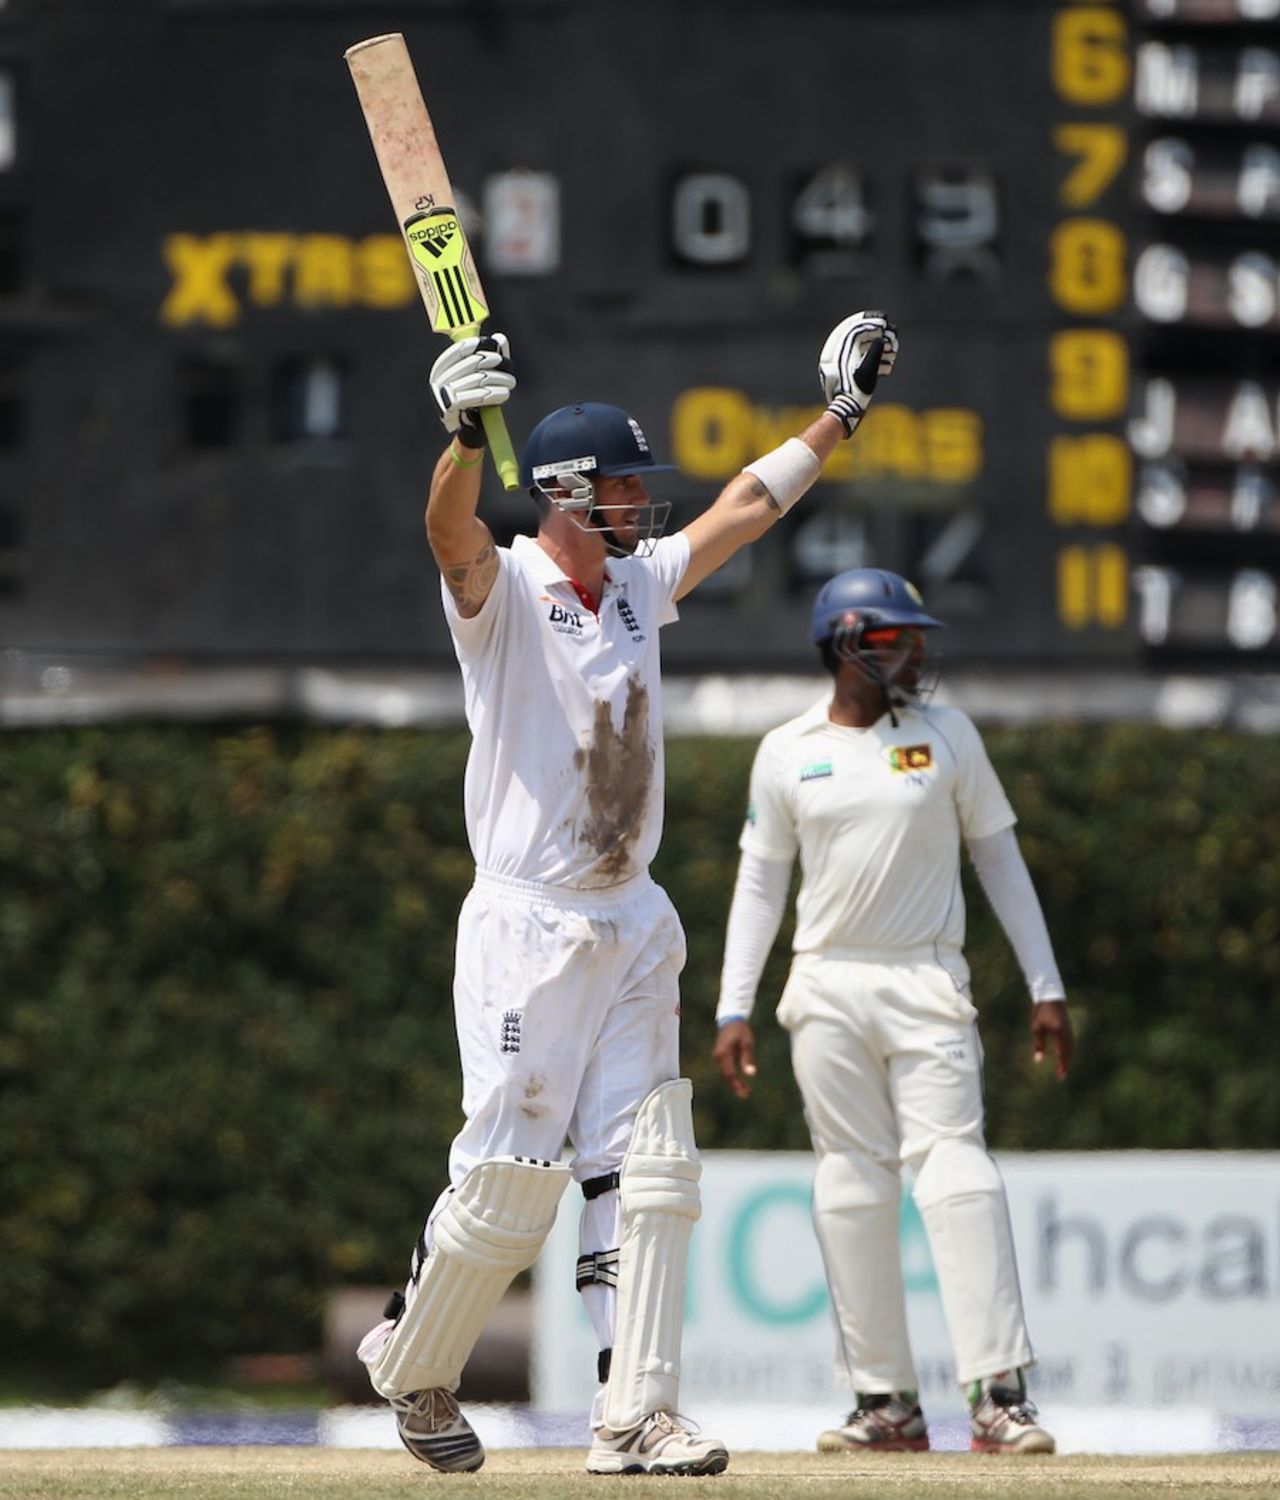 Kevin Pietersen celebrates after hitting the winning six, Sri Lanka v England, 2nd Test, Colombo, P Sara Oval, 5th day, April 7, 2012